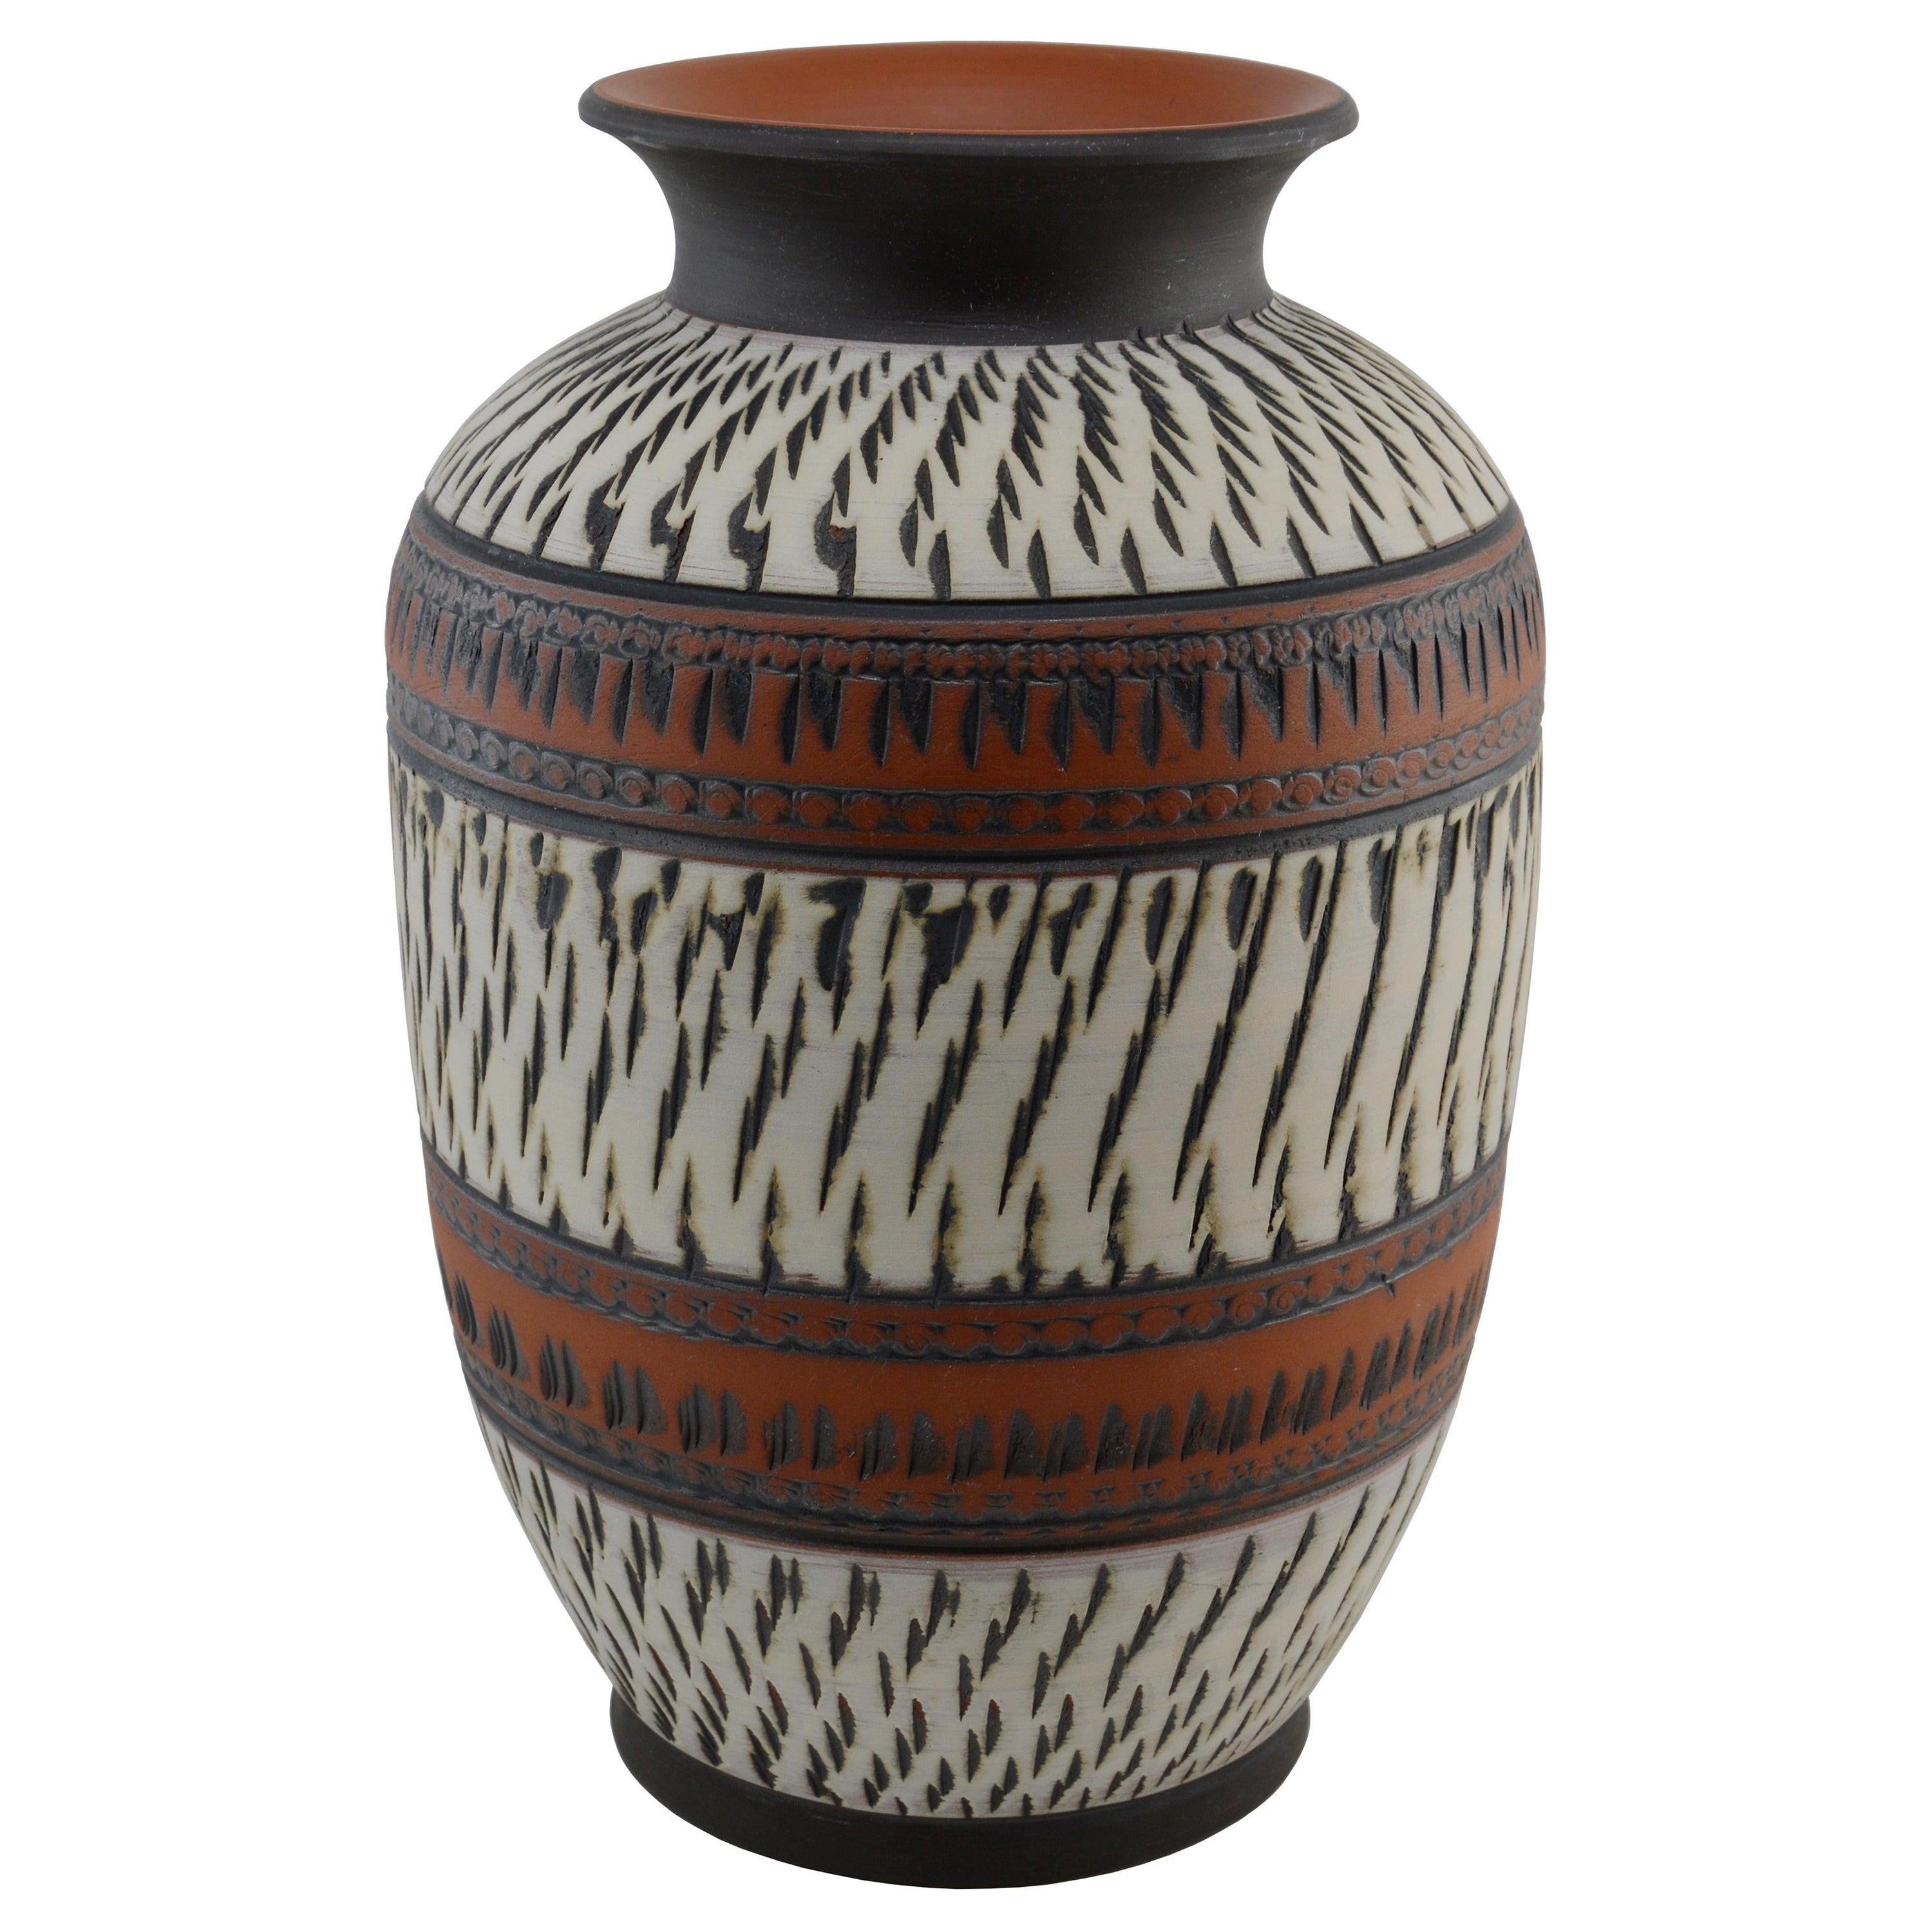 Midcentury Ceramic Vase, Germany, 1960s, Possibly Vintage Lamp